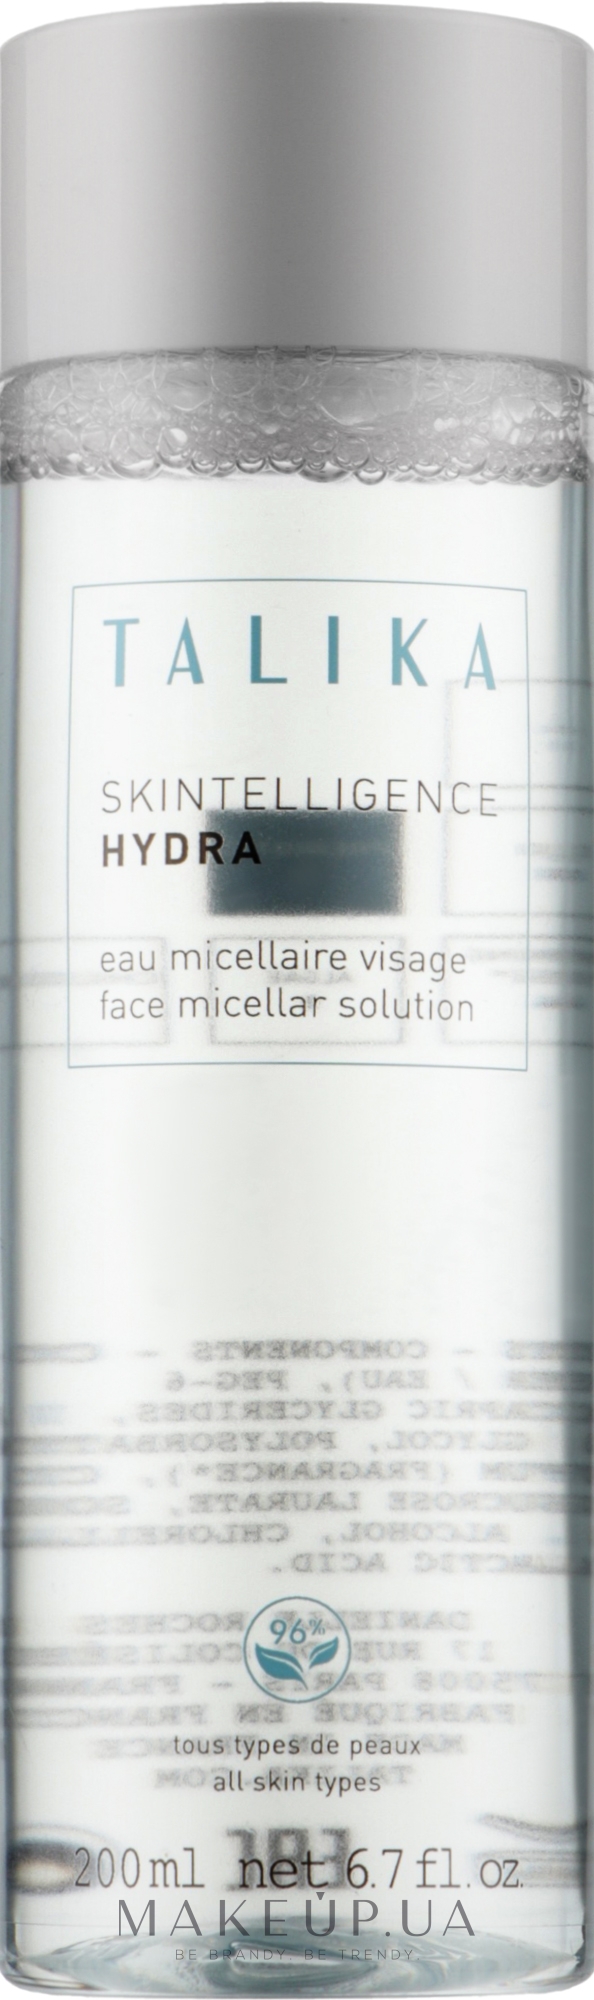 Увлажняющая мицеллярная вода - Talika Skintelligence Hydra Face Micellar Solution — фото 200ml